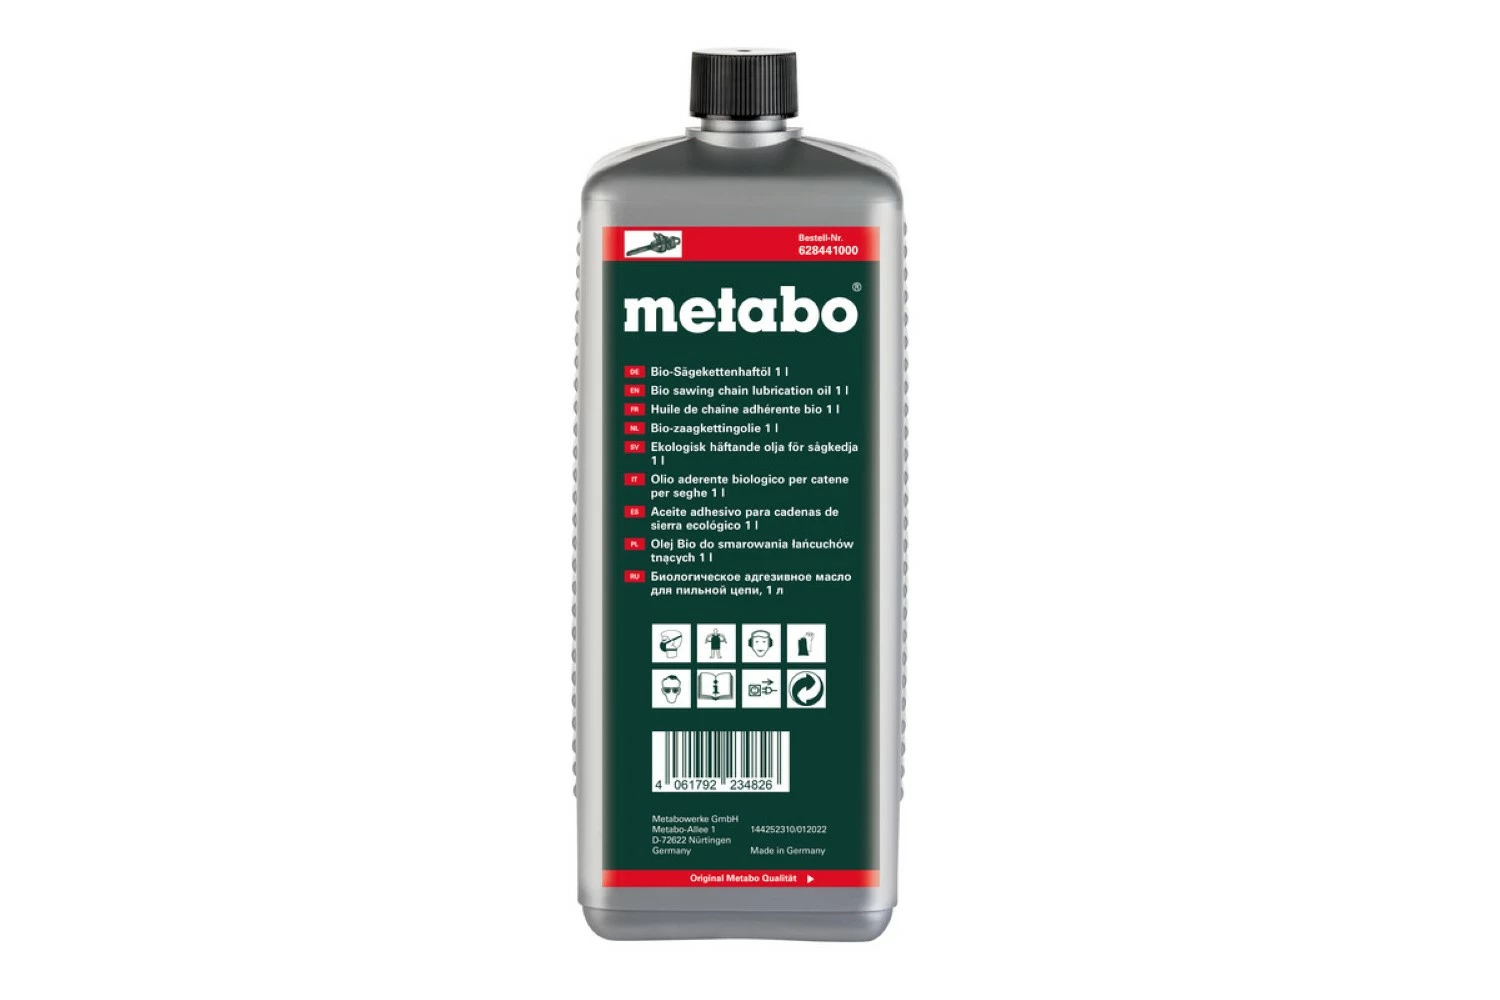 Metabo 628441000 Bio-zaagkettingolie - 1L | Gereedschapcentrum.nl